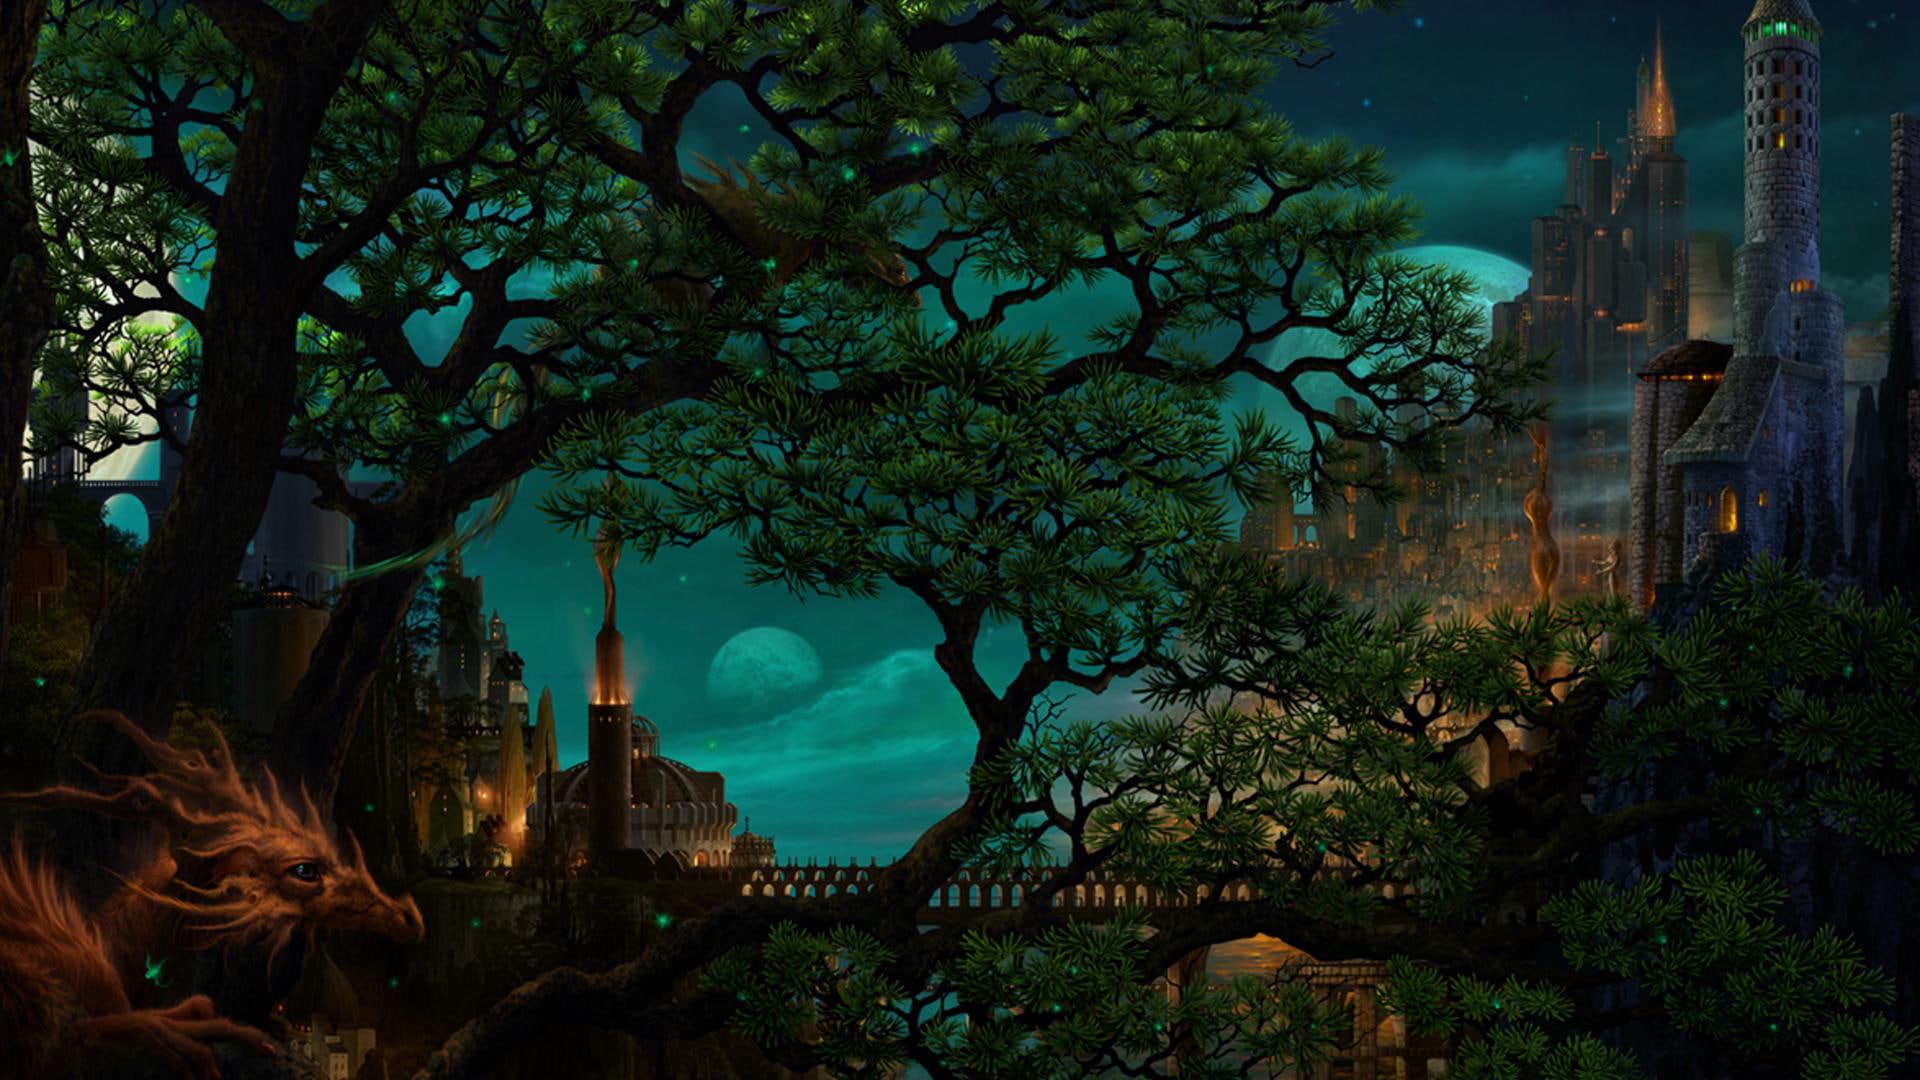 Castle Of Wizards, dragon, full moon, bridge, gothic, imagination